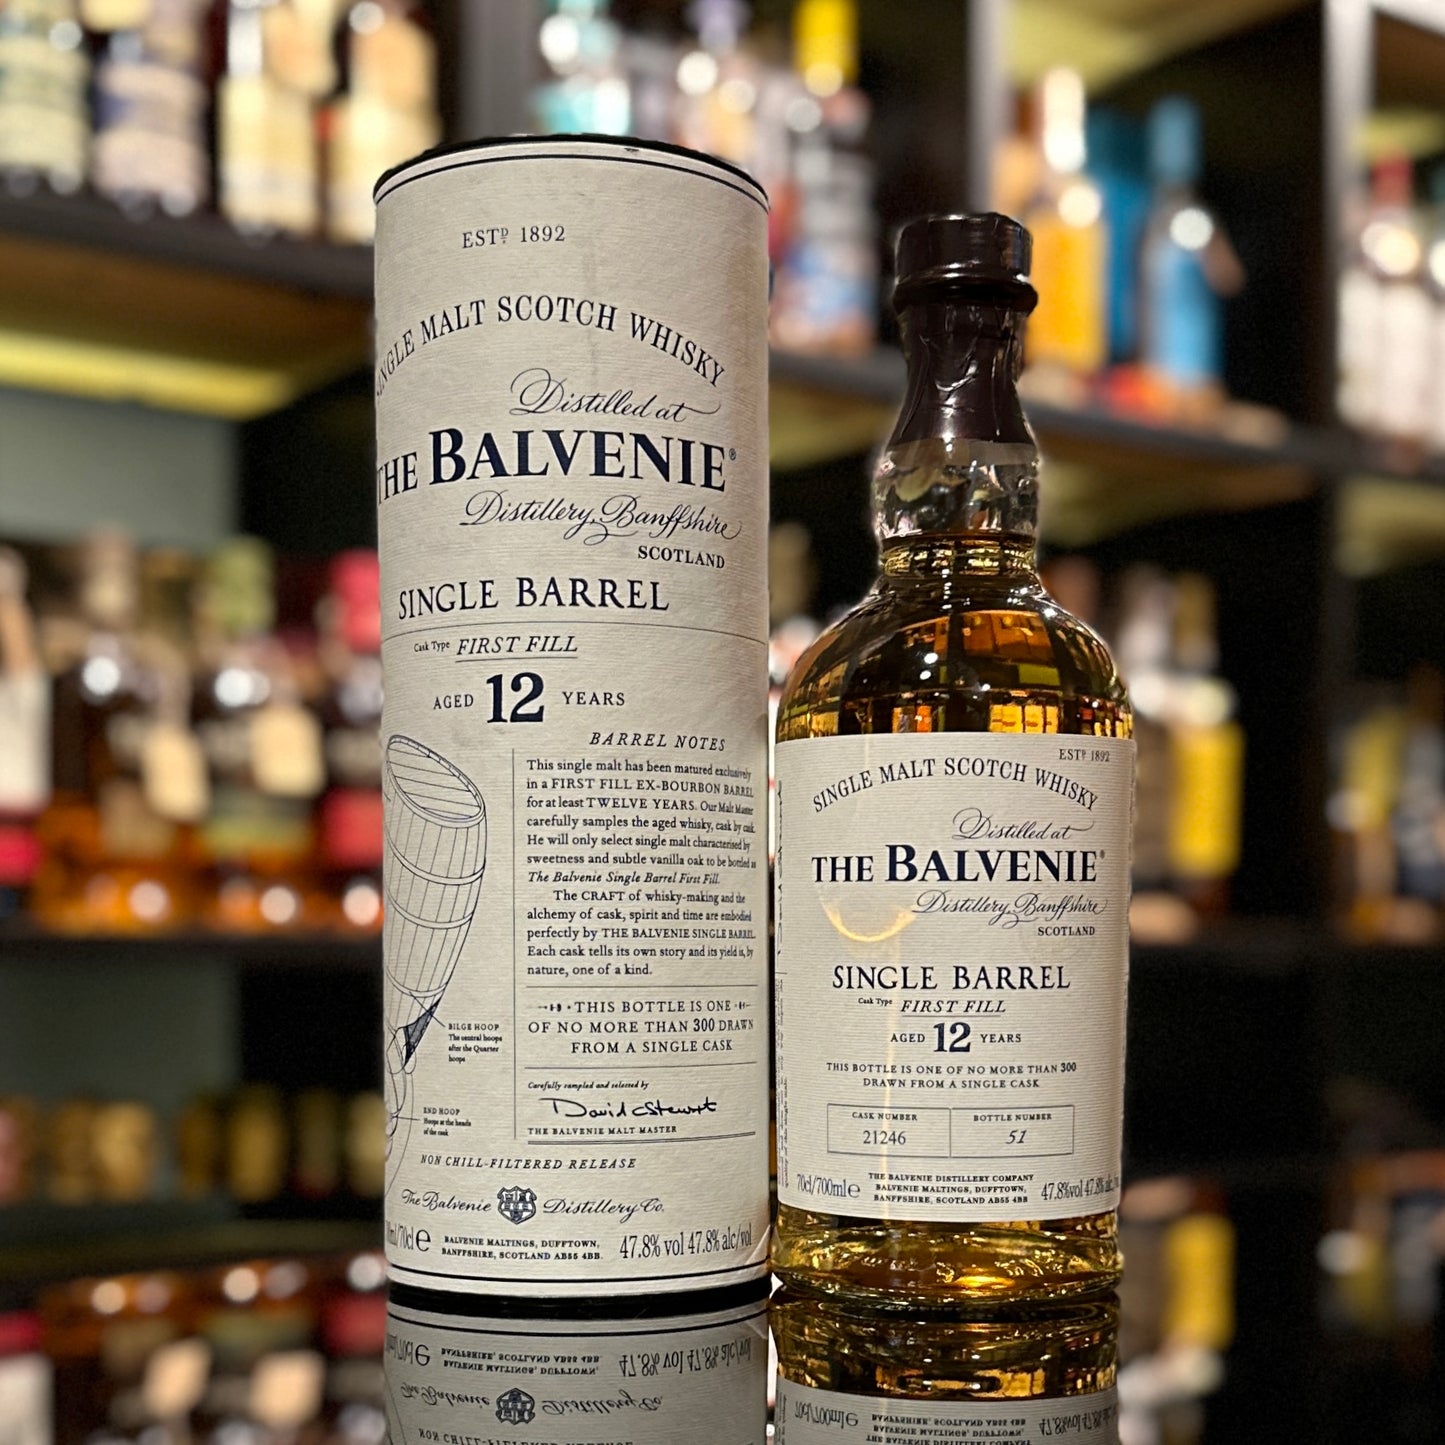 Balvenie 12 Year Old Single Barrel #21246 Single Malt Scotch Whisky